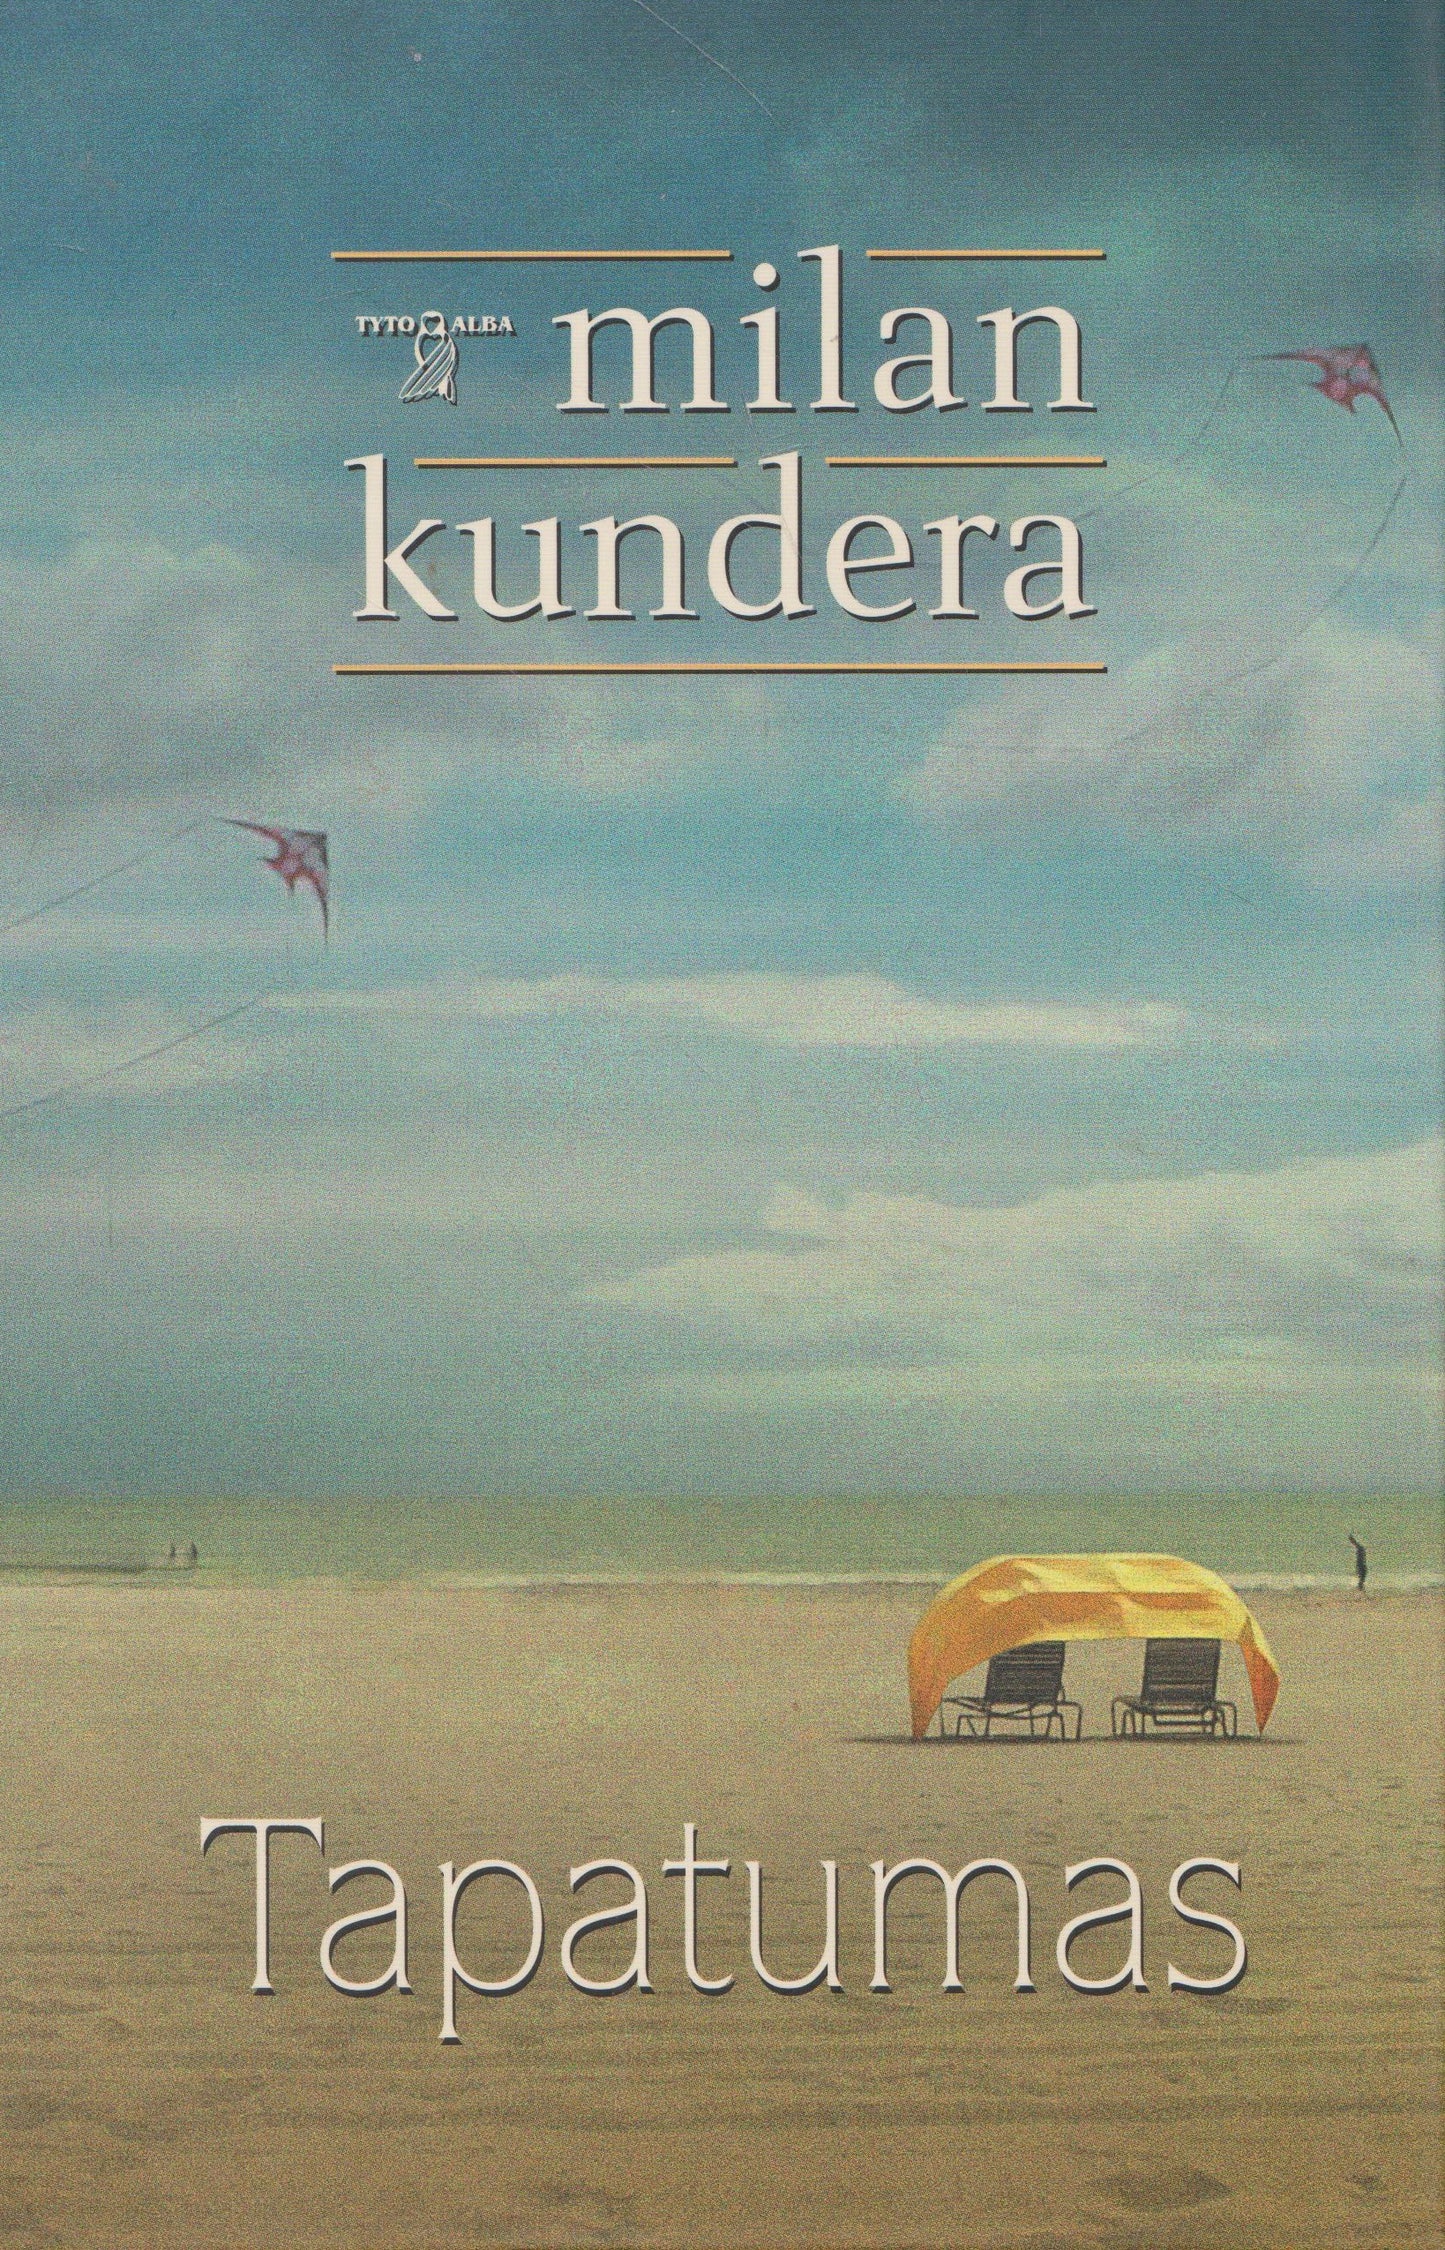 Milan Kundera - Tapatumas